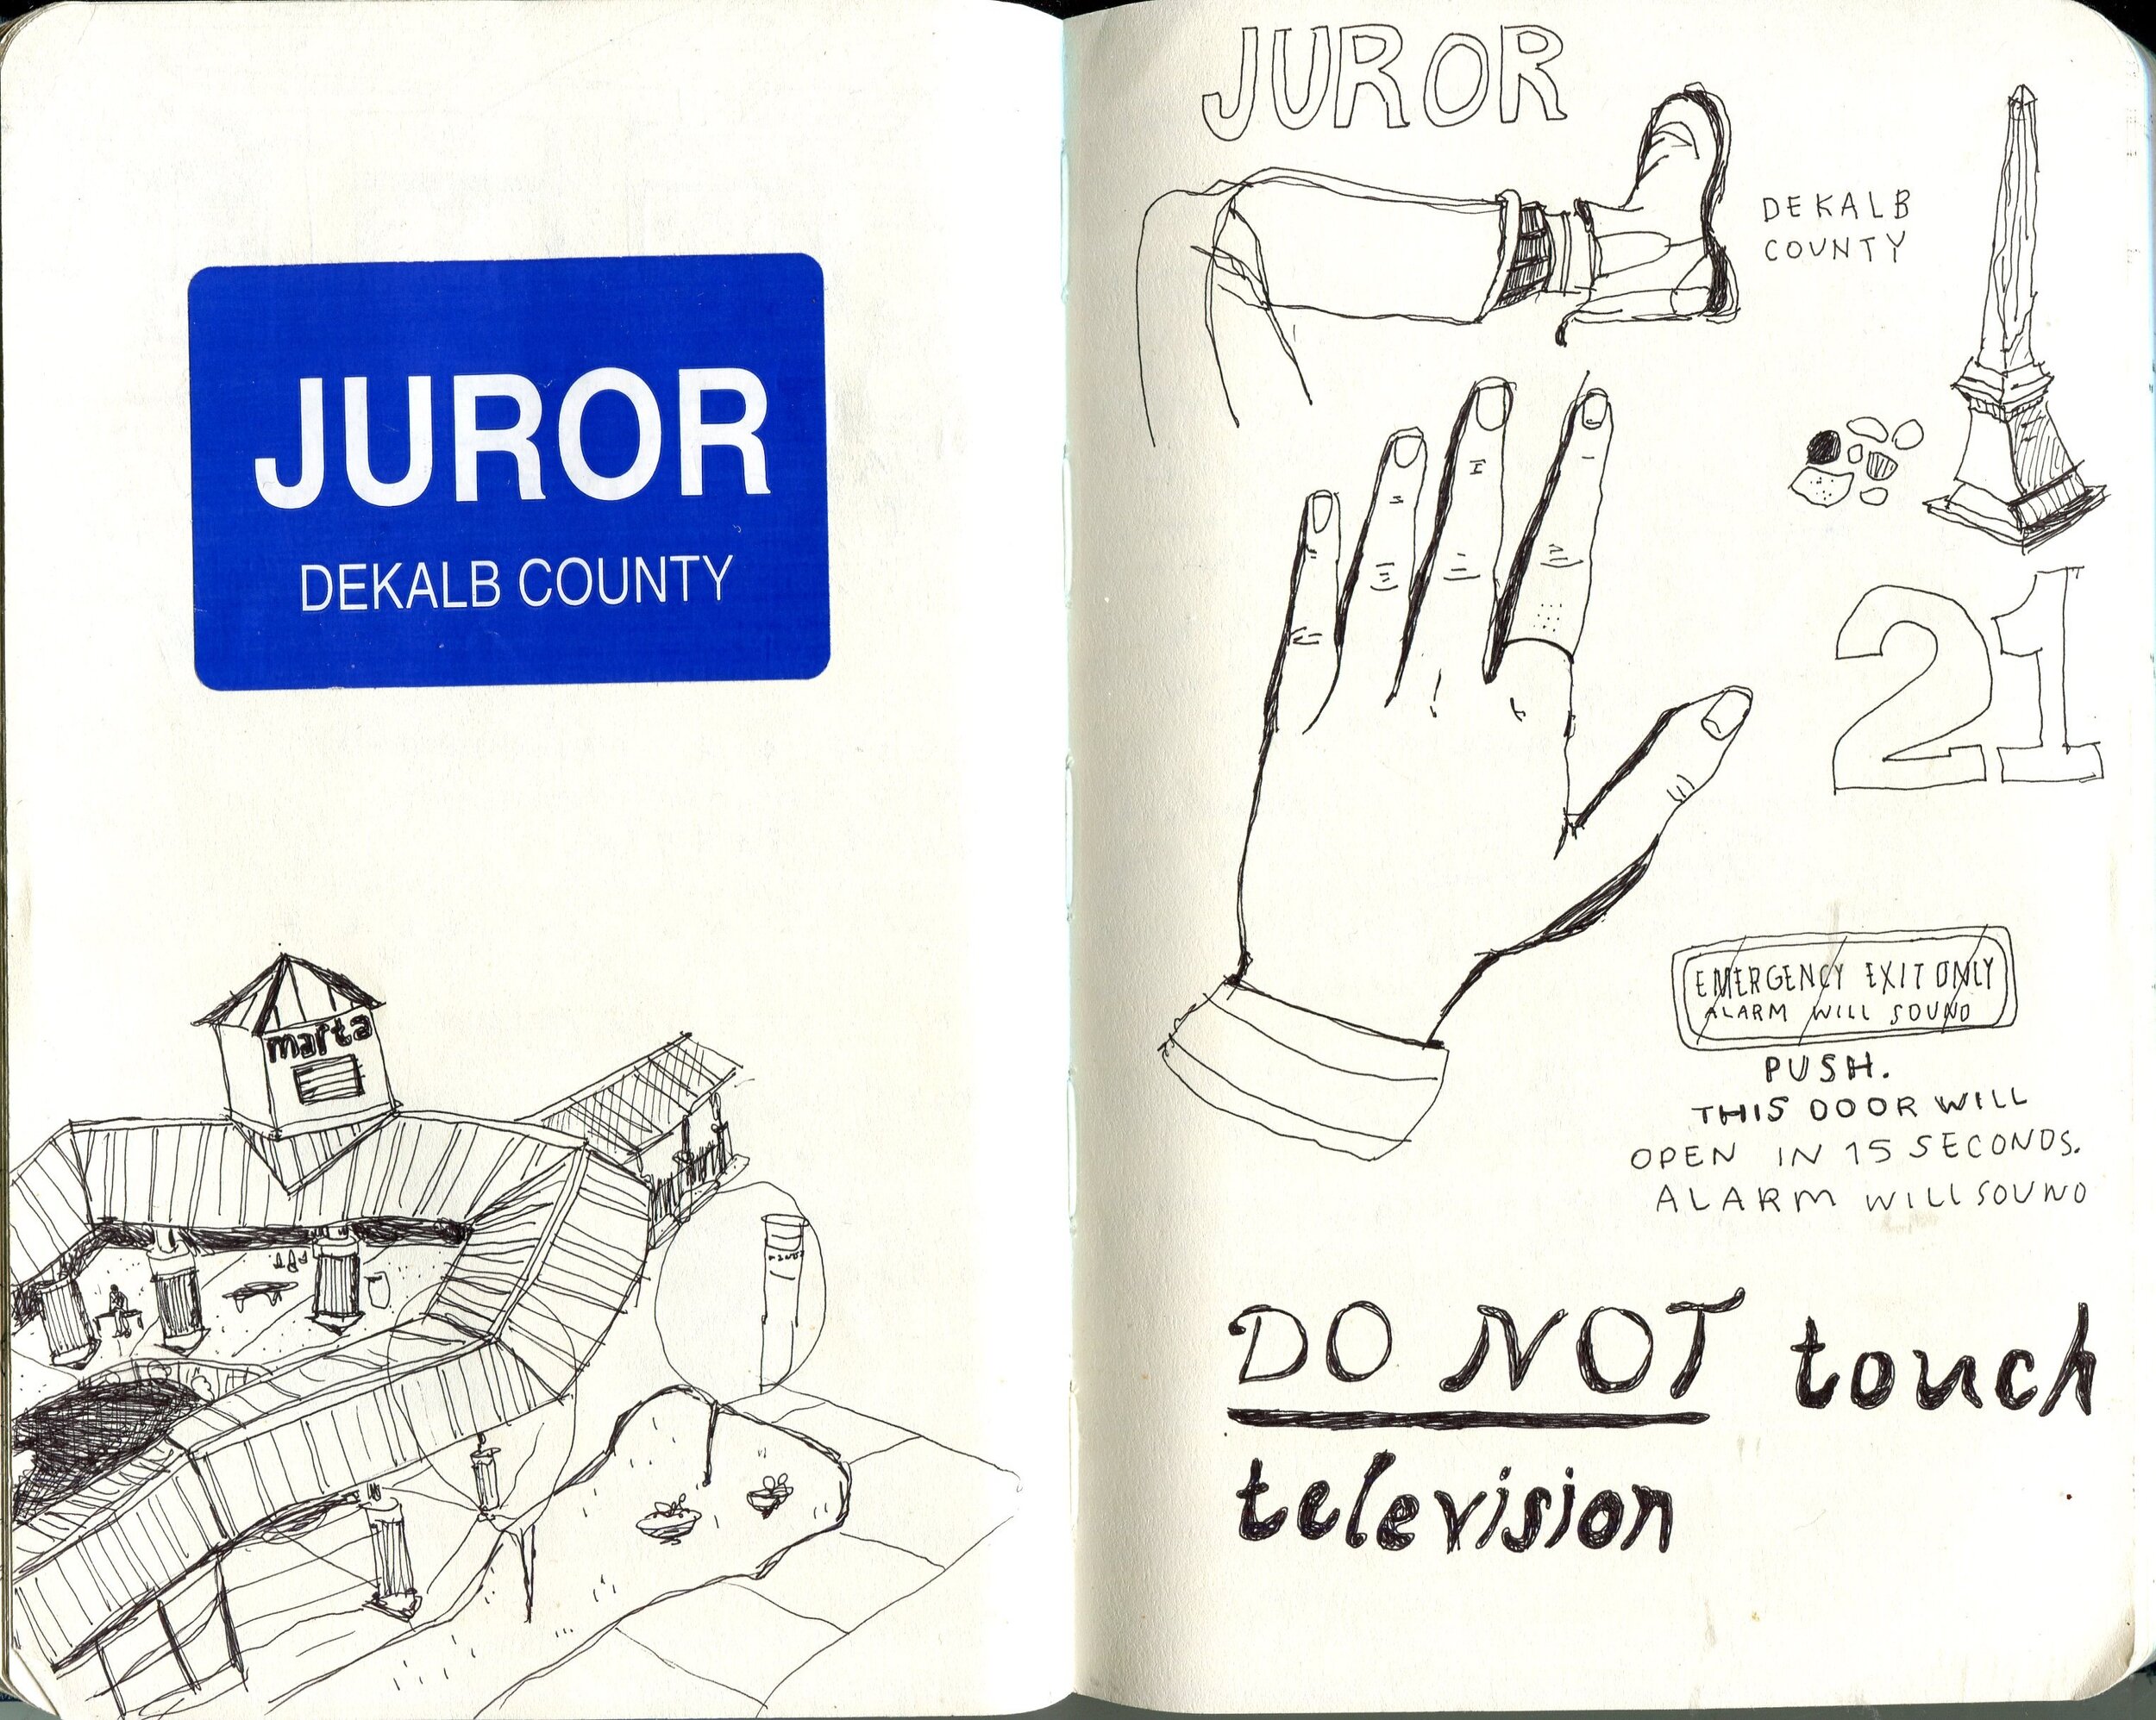 jury duty, dekalb county courthouse